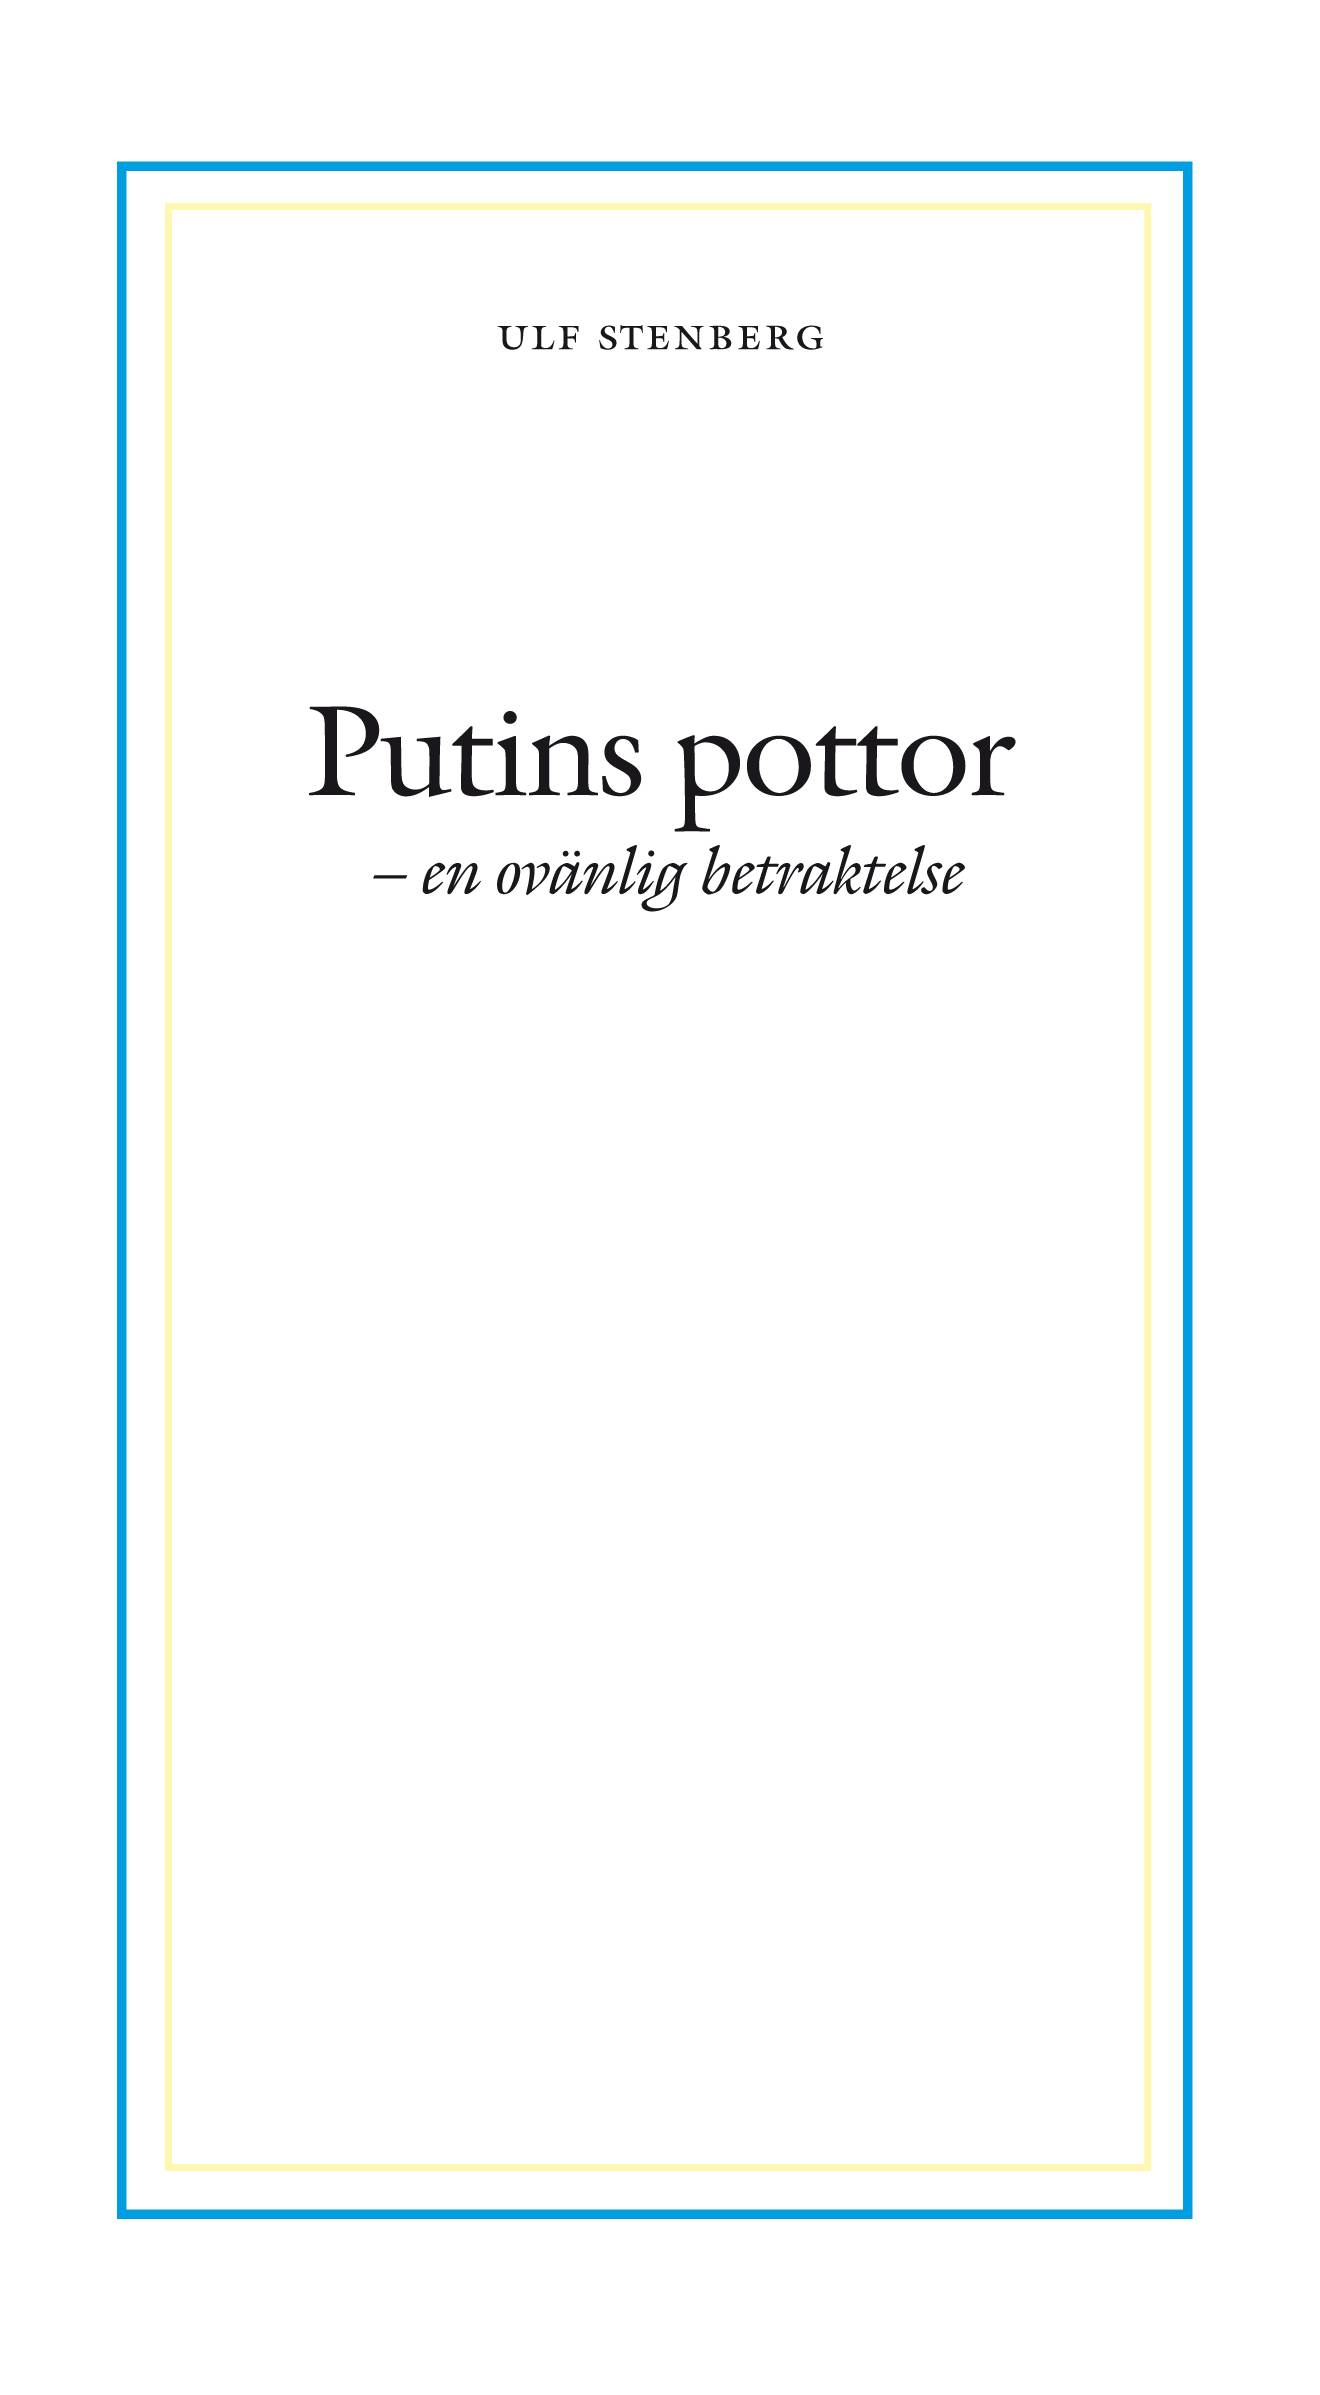 Putins pottor